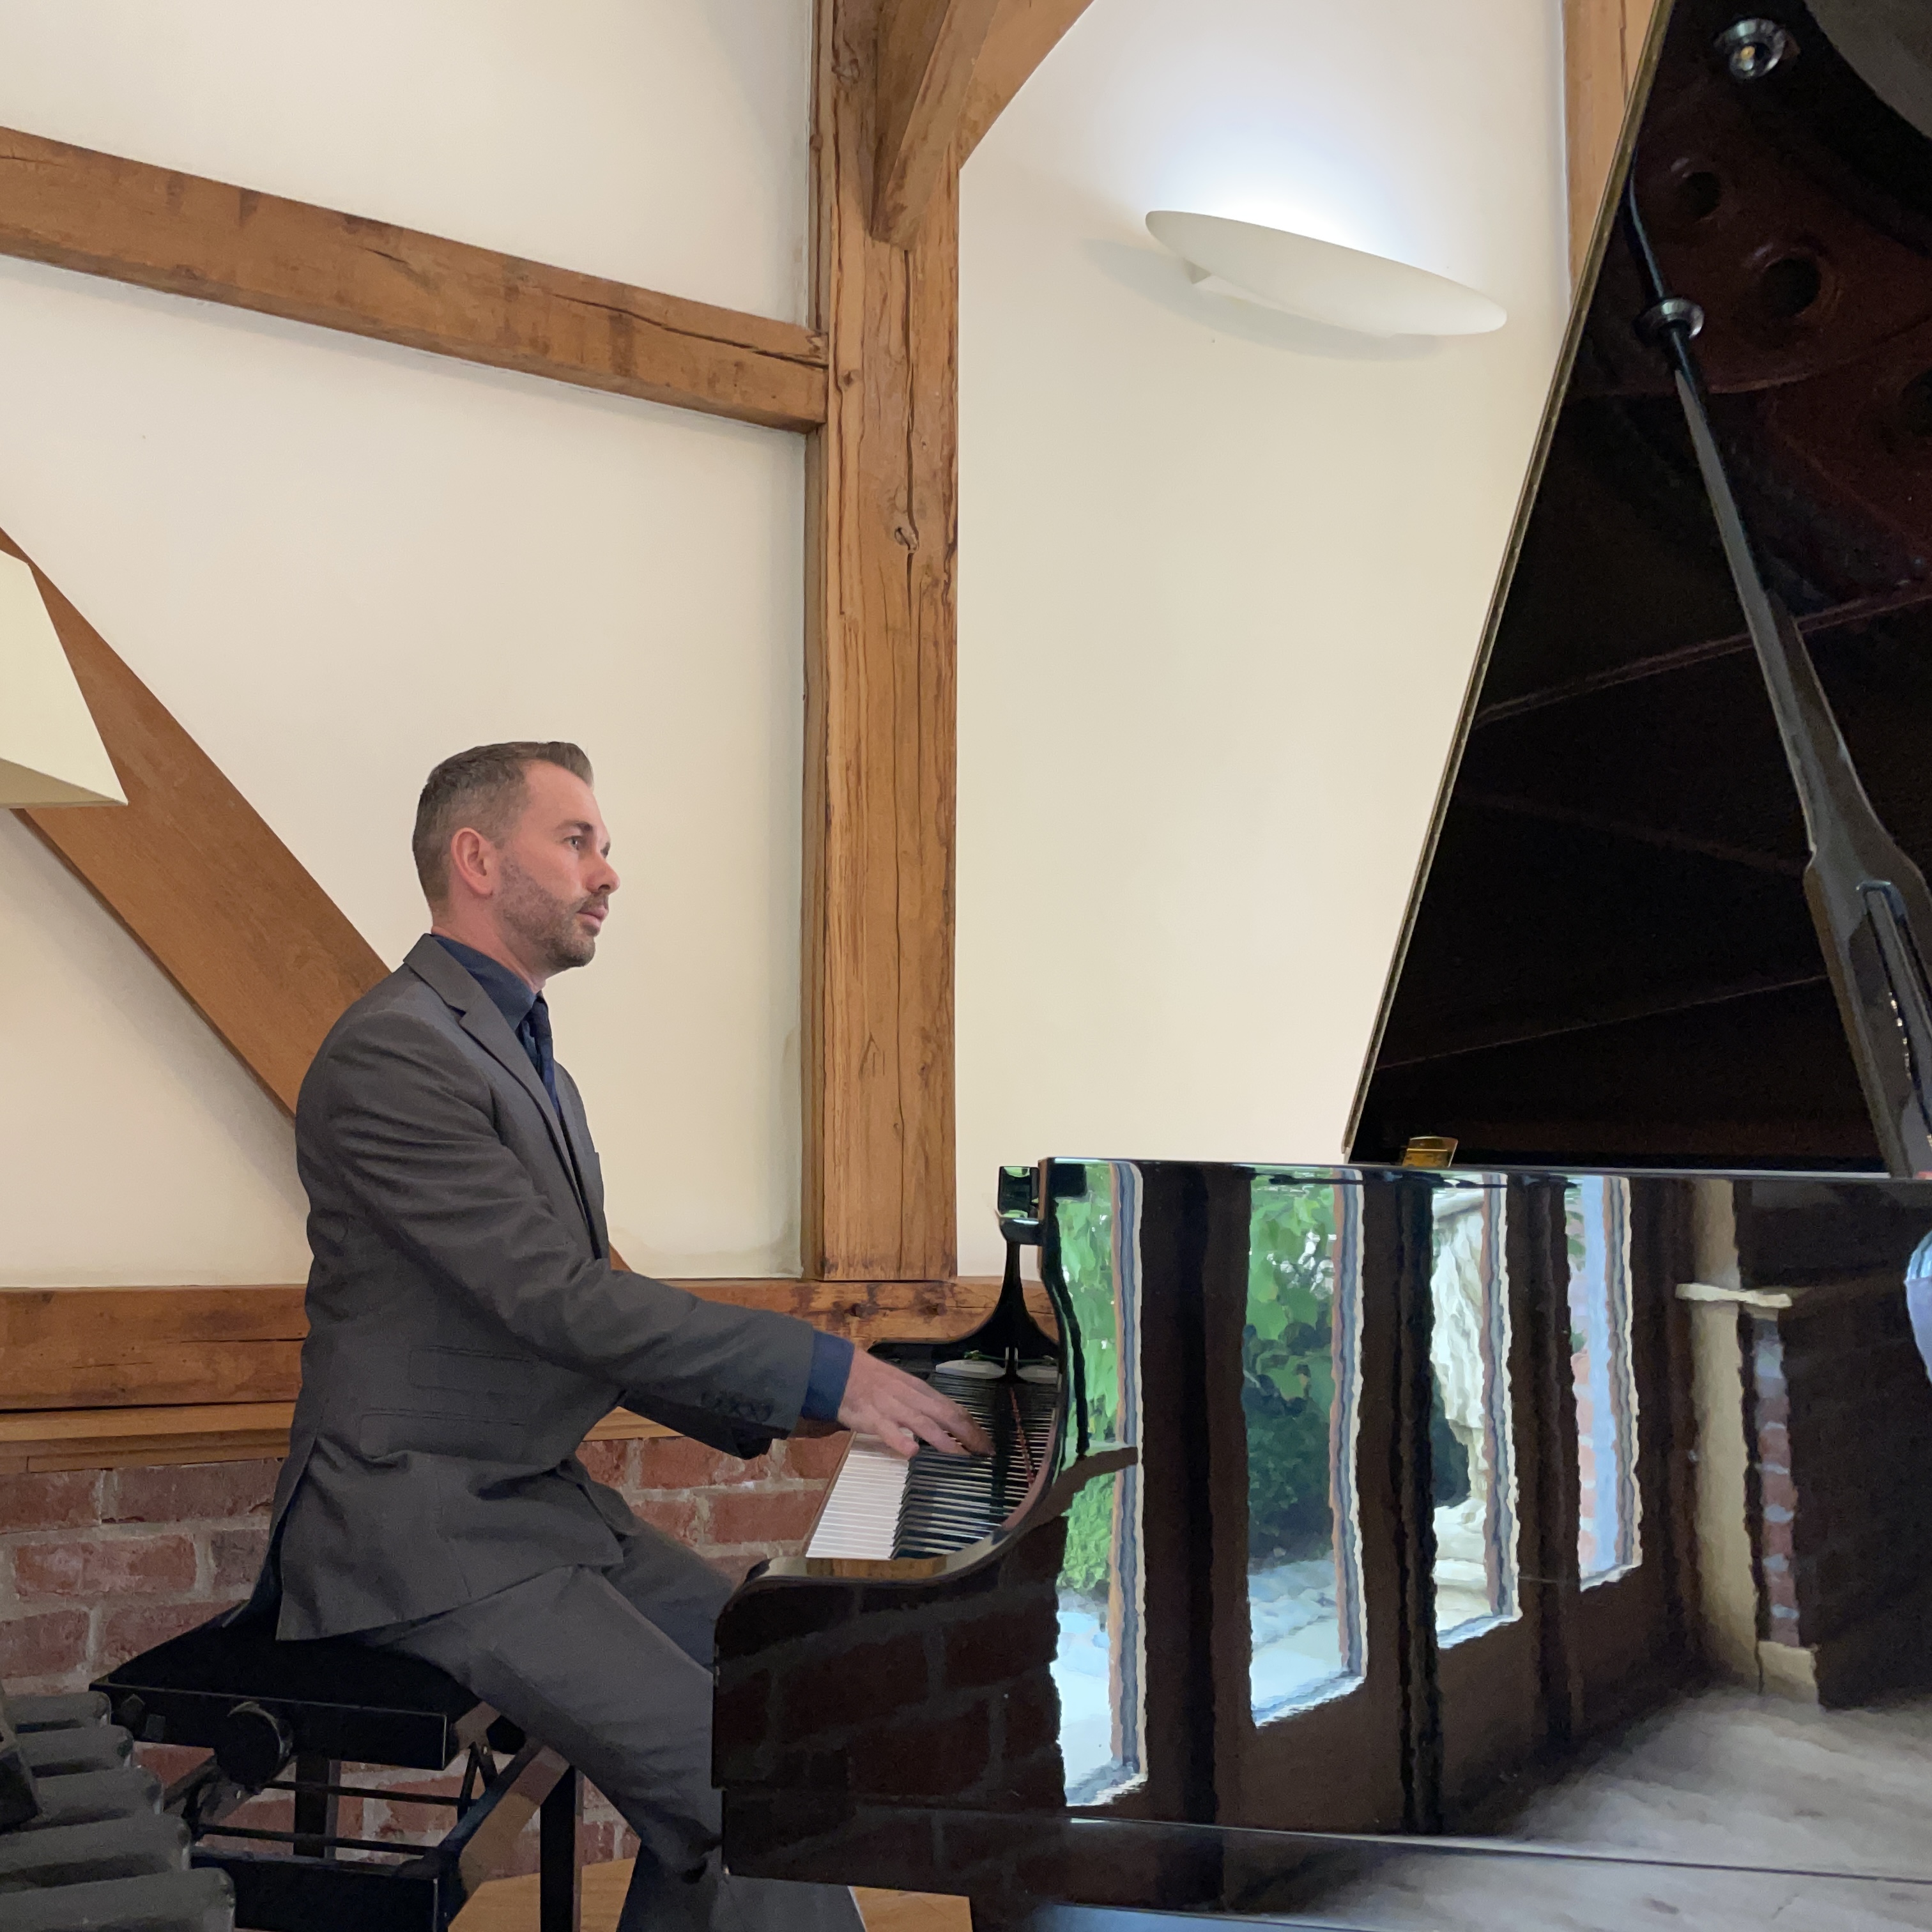 Craig Smith Sandhole Oak Barn wedding pianist for wedding breakfasts